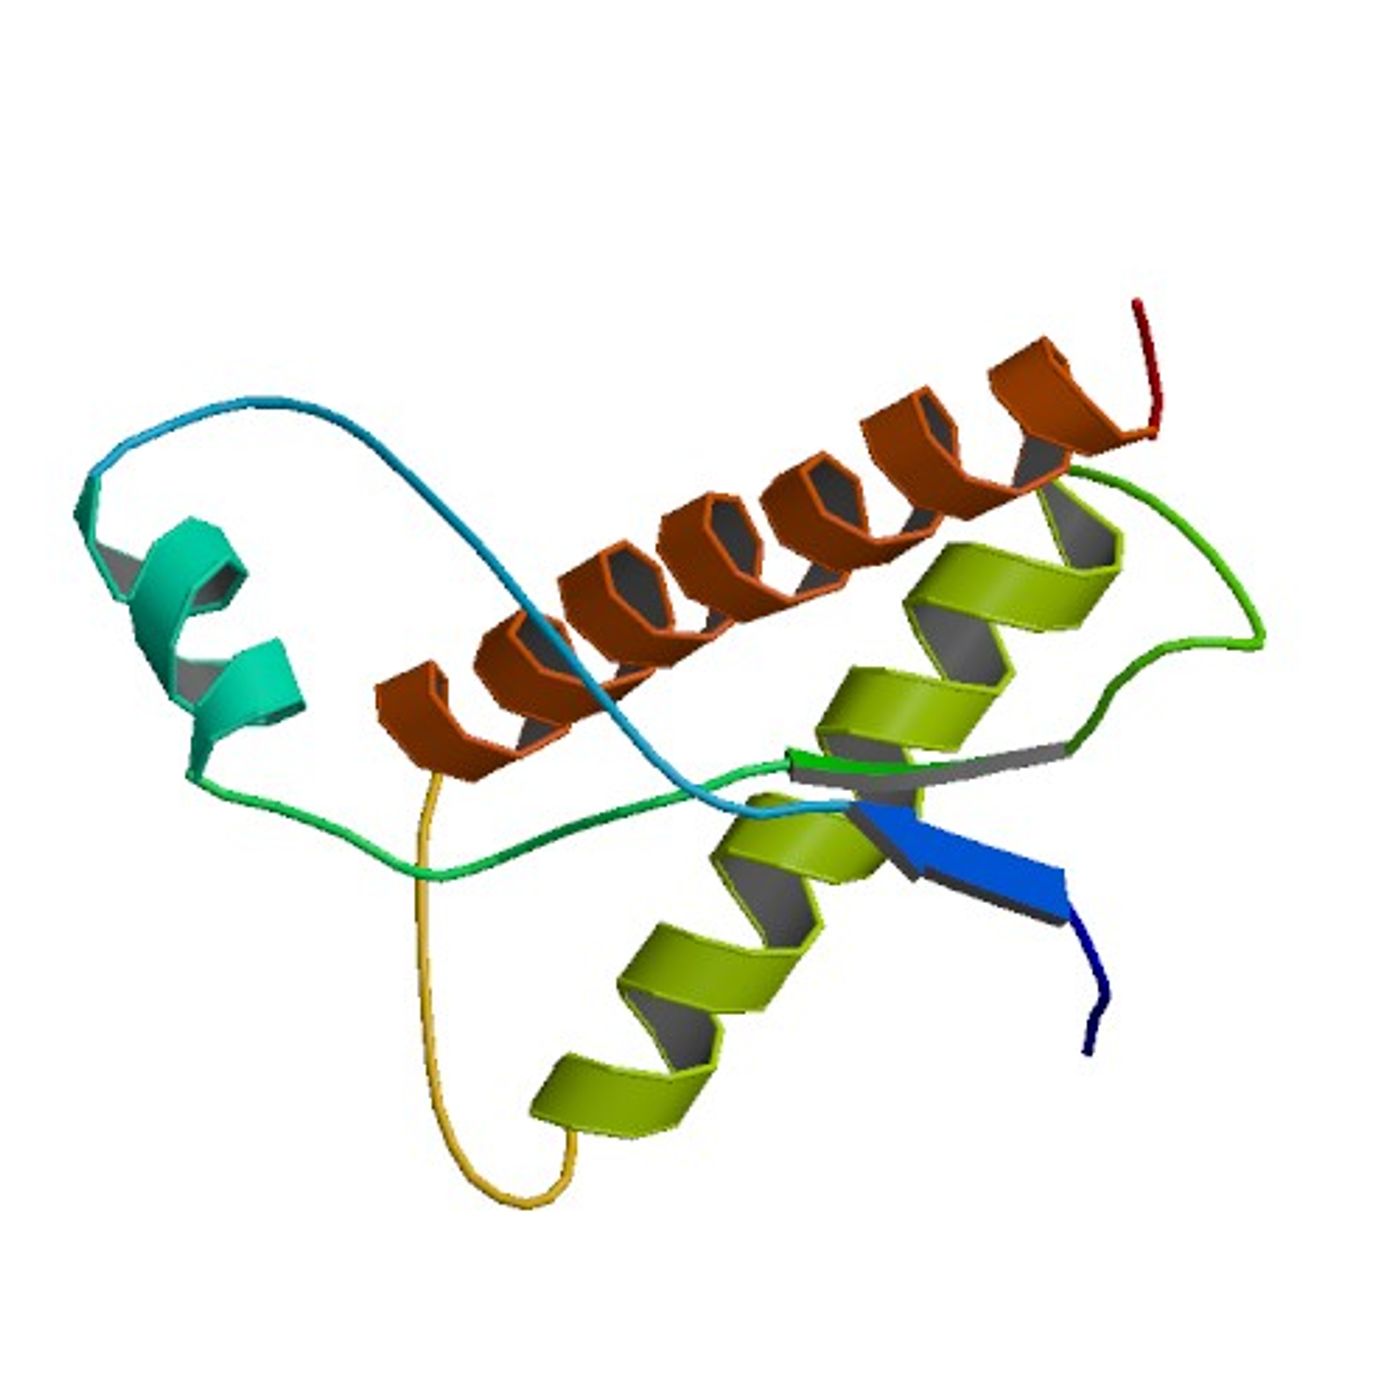 Bovine prion protein residues / Credit: Lopez-Garcia, F., Zahn, R., Riek, R., Wuthrich, K. & RCSB